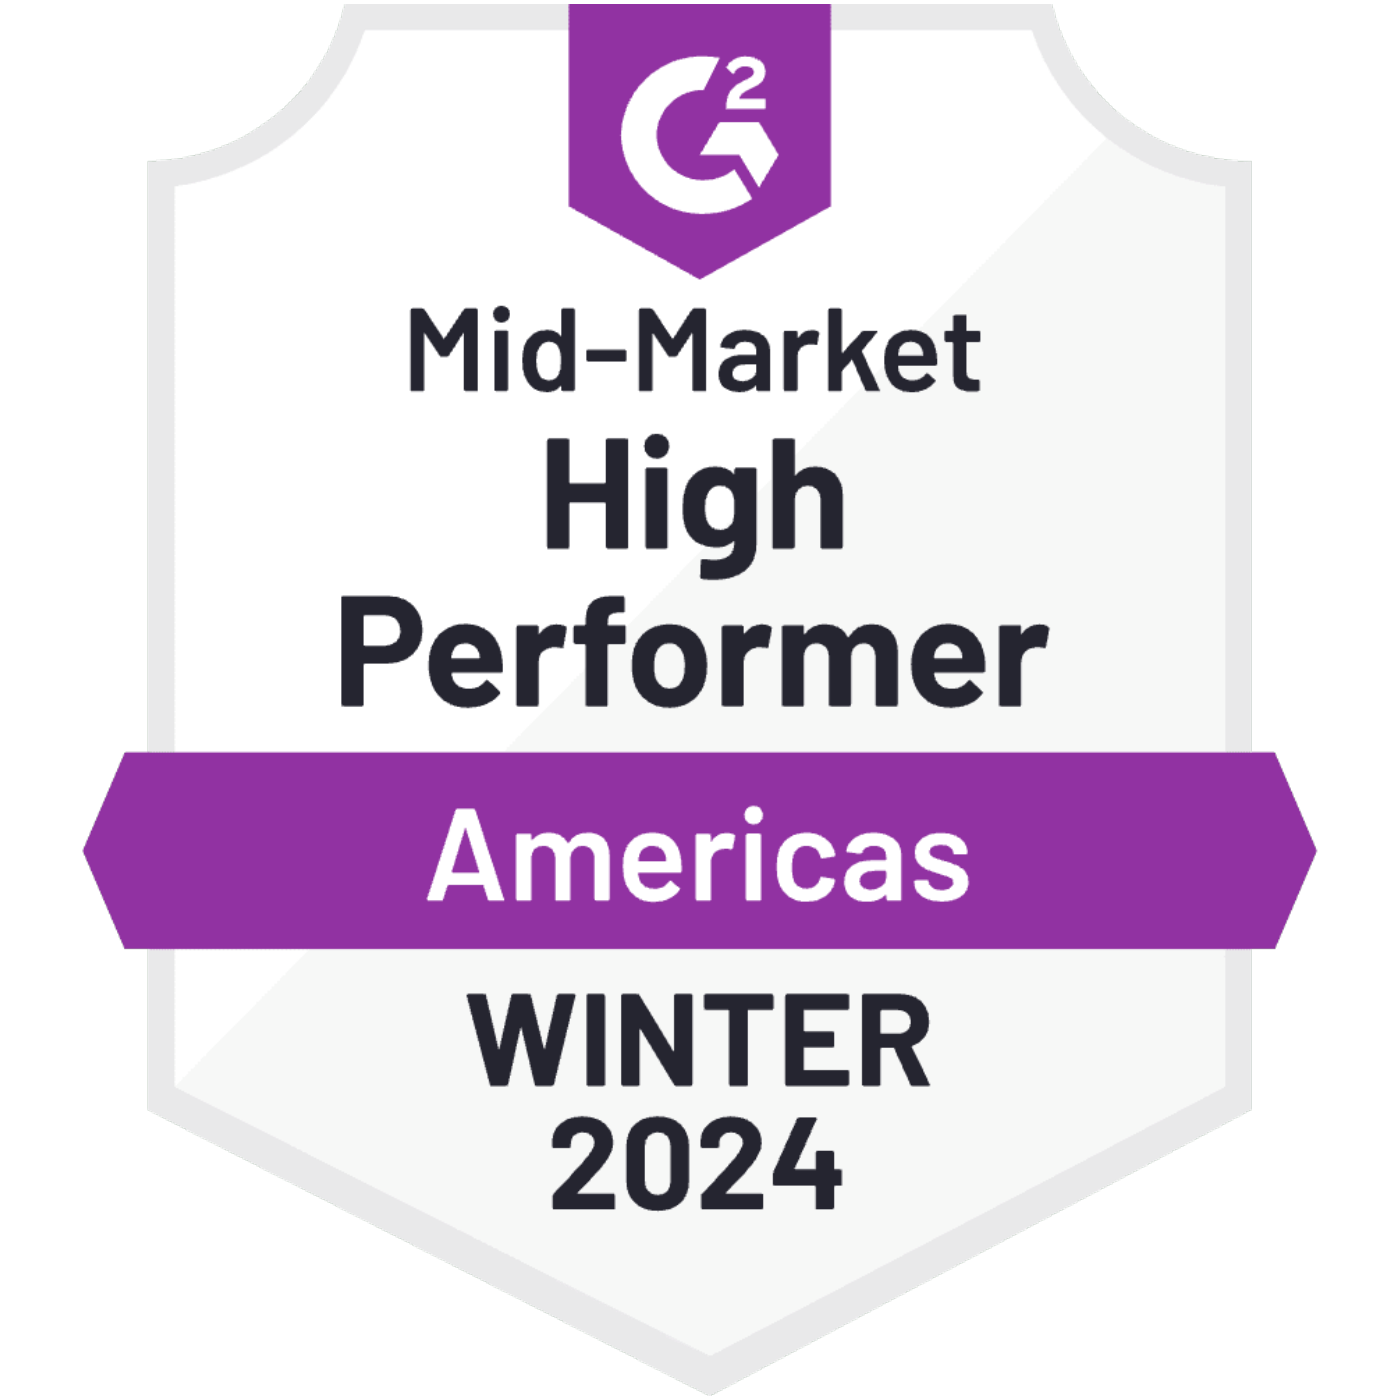 G2 Badge: Mid-Market High Performer Americas Winter 2024